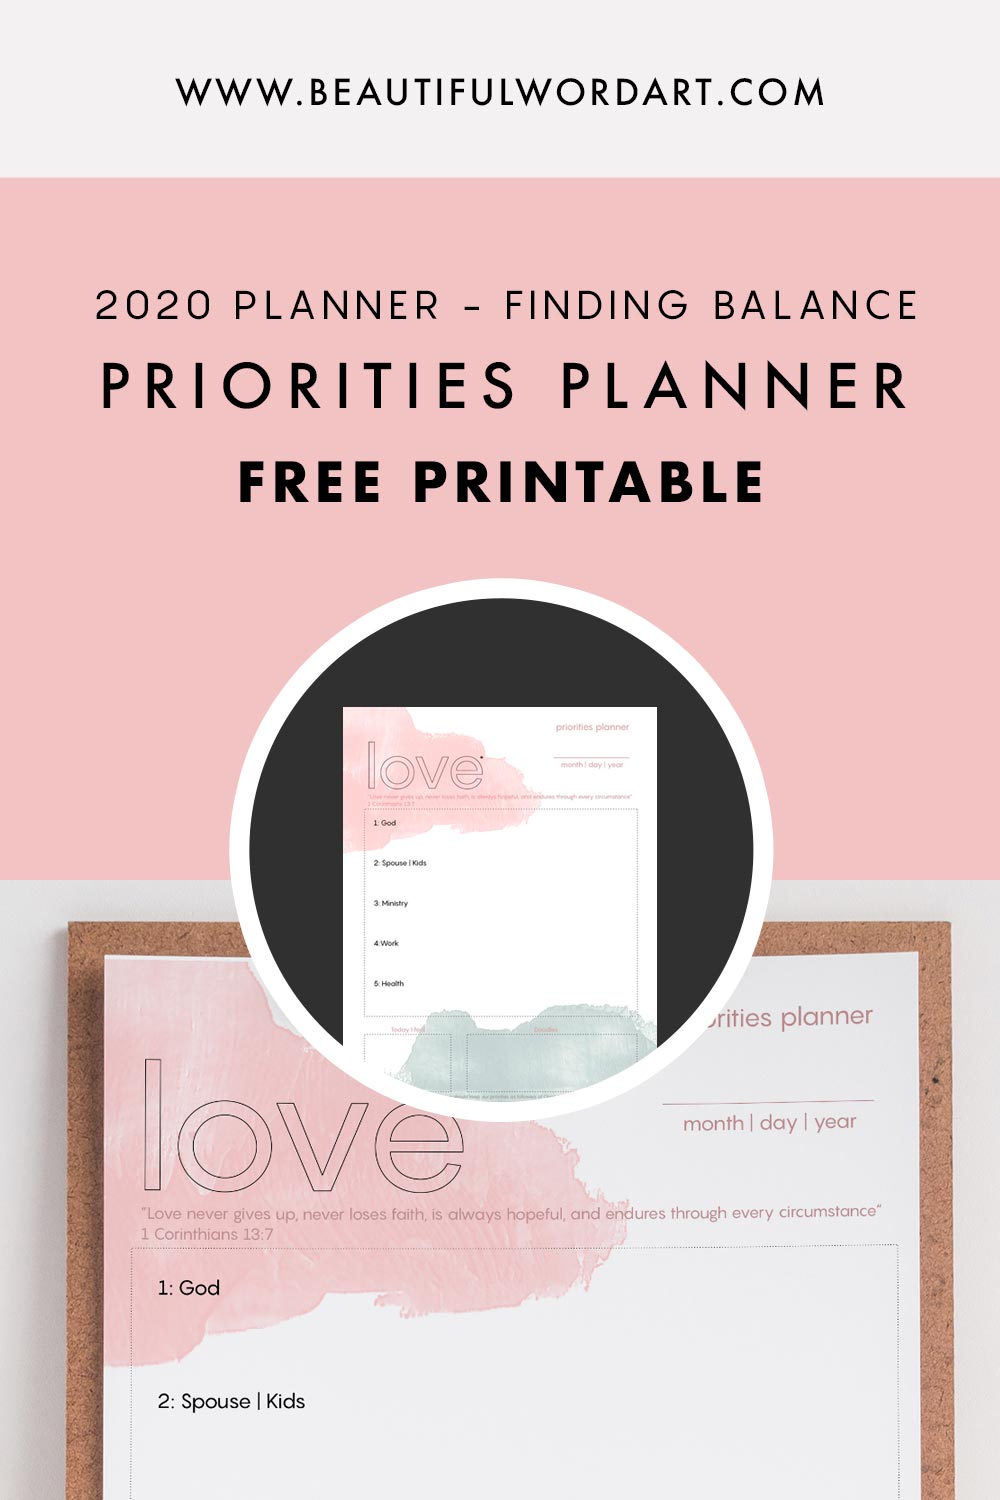 Ursula Rosien Finding balance - Priorities planner free printable Hi